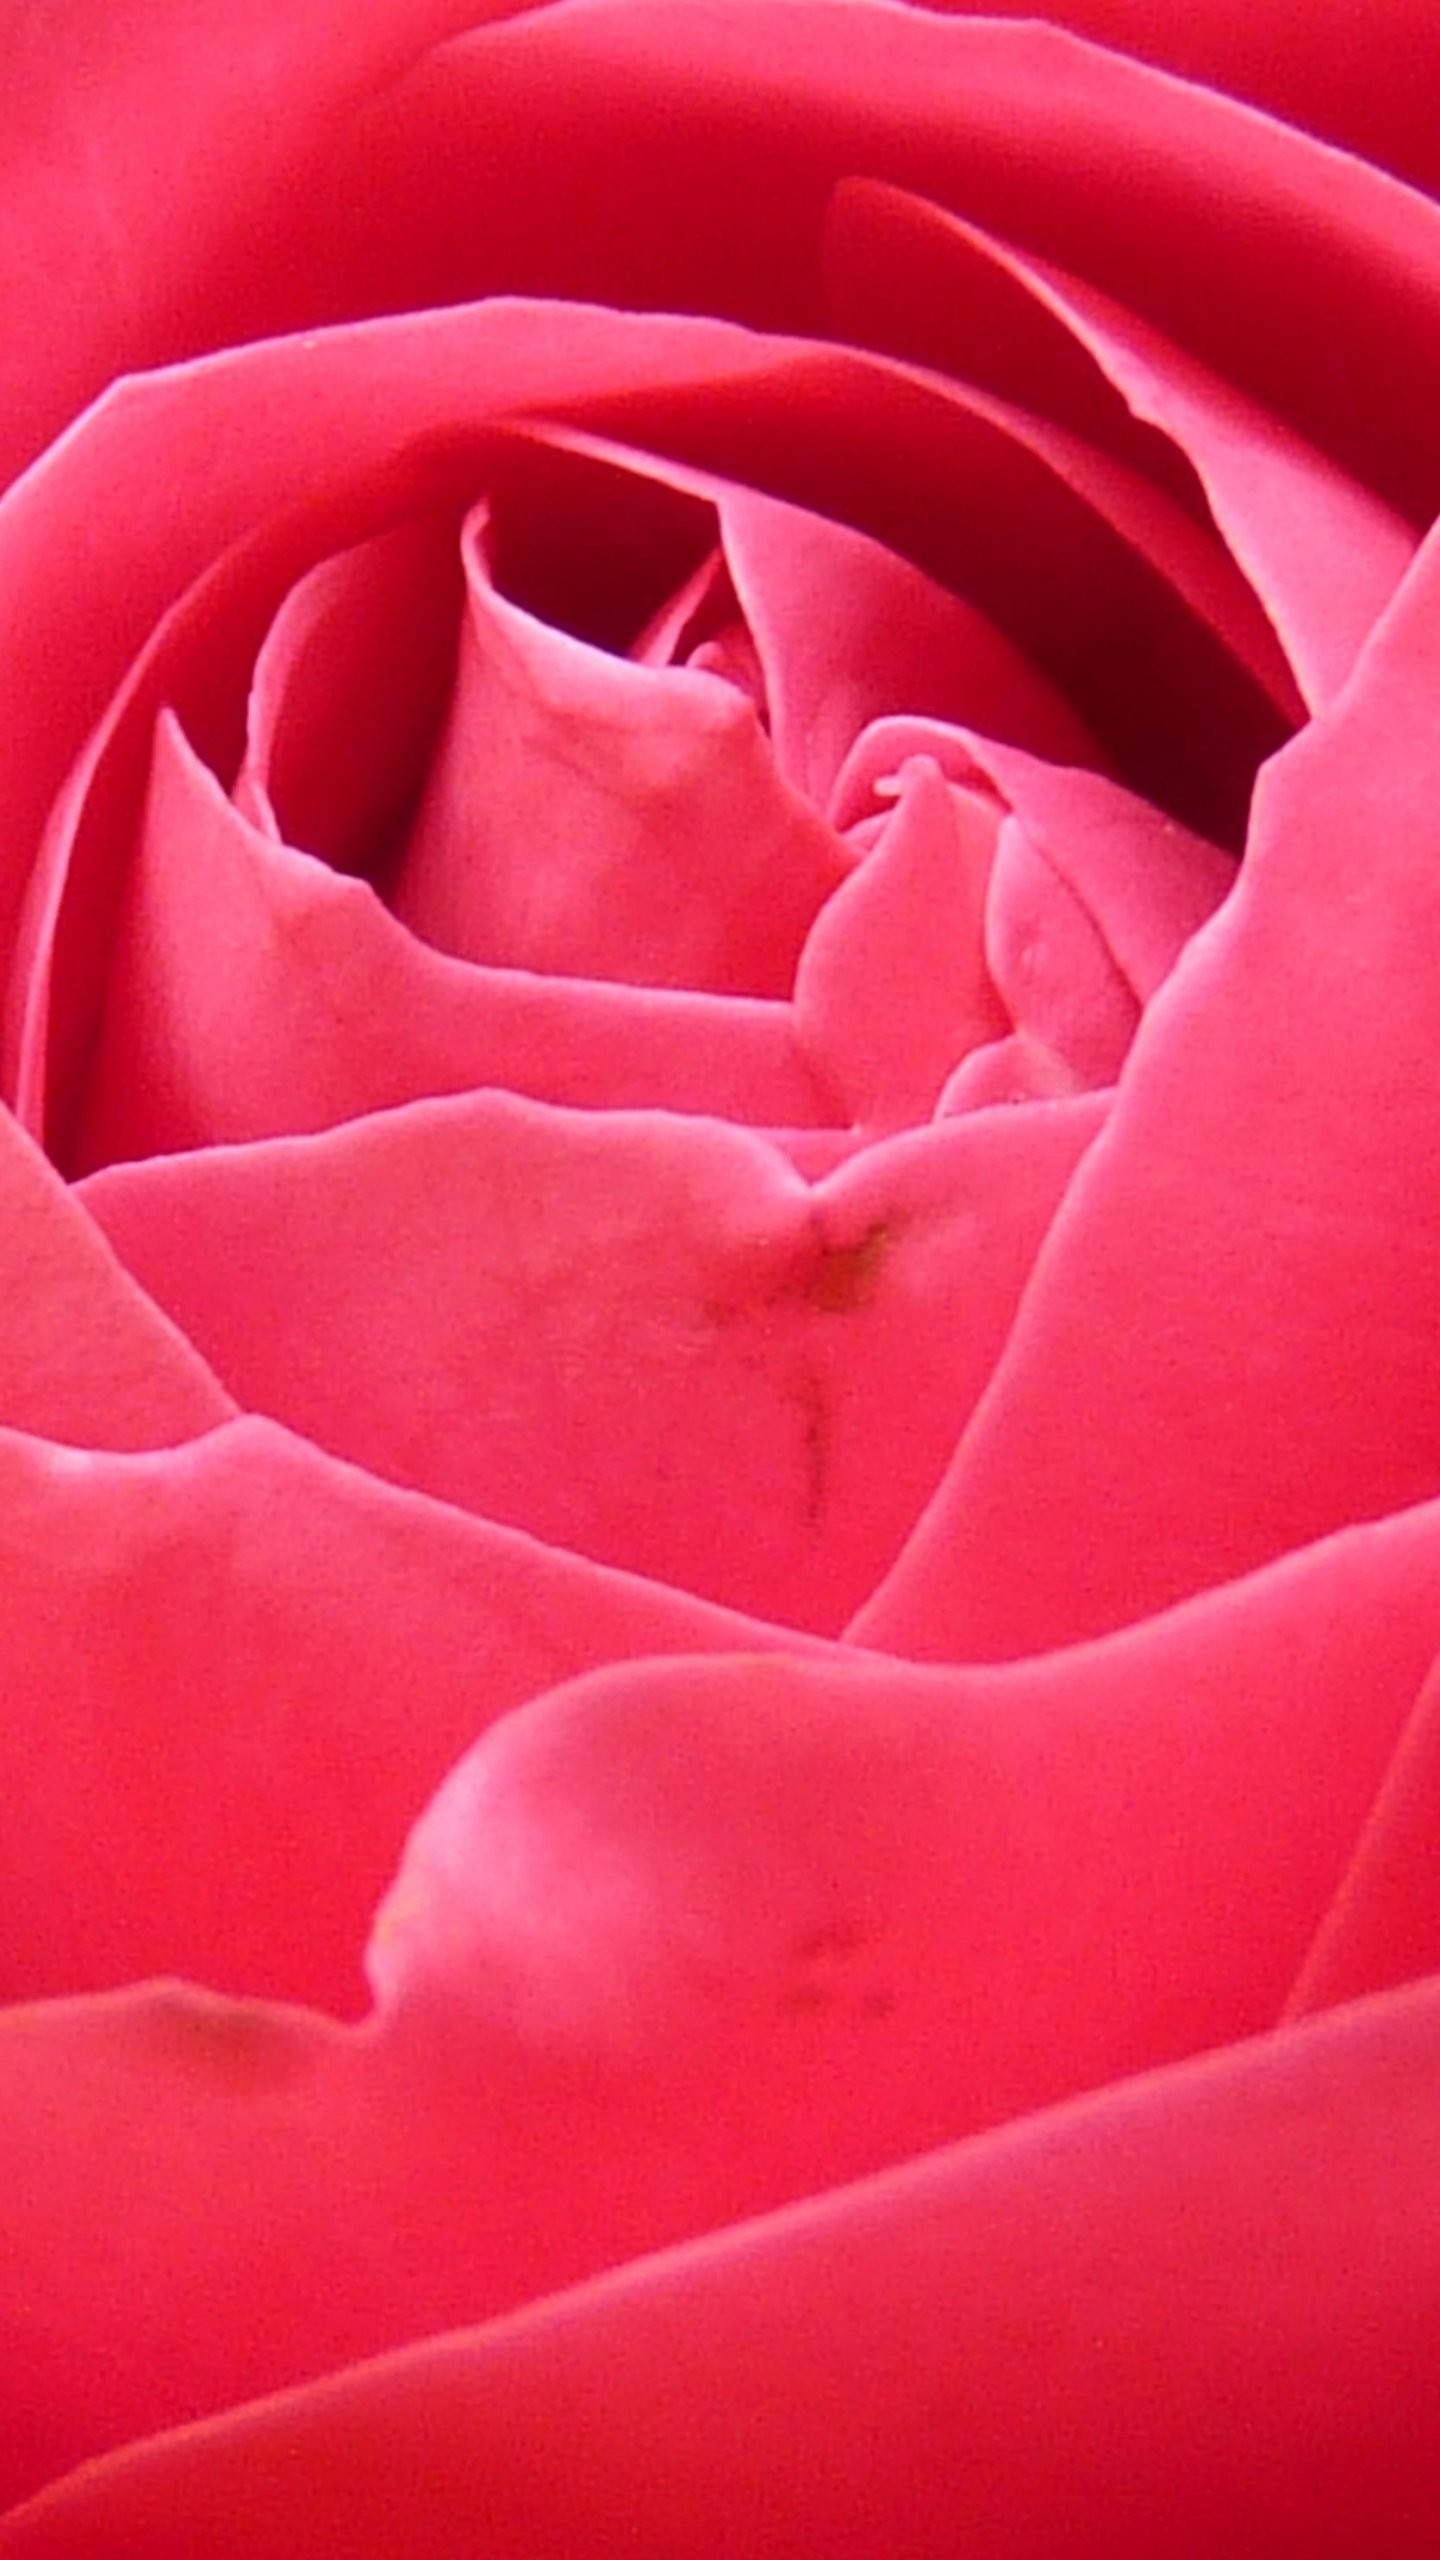 1440x2560 Bright Pink Rose Closeup